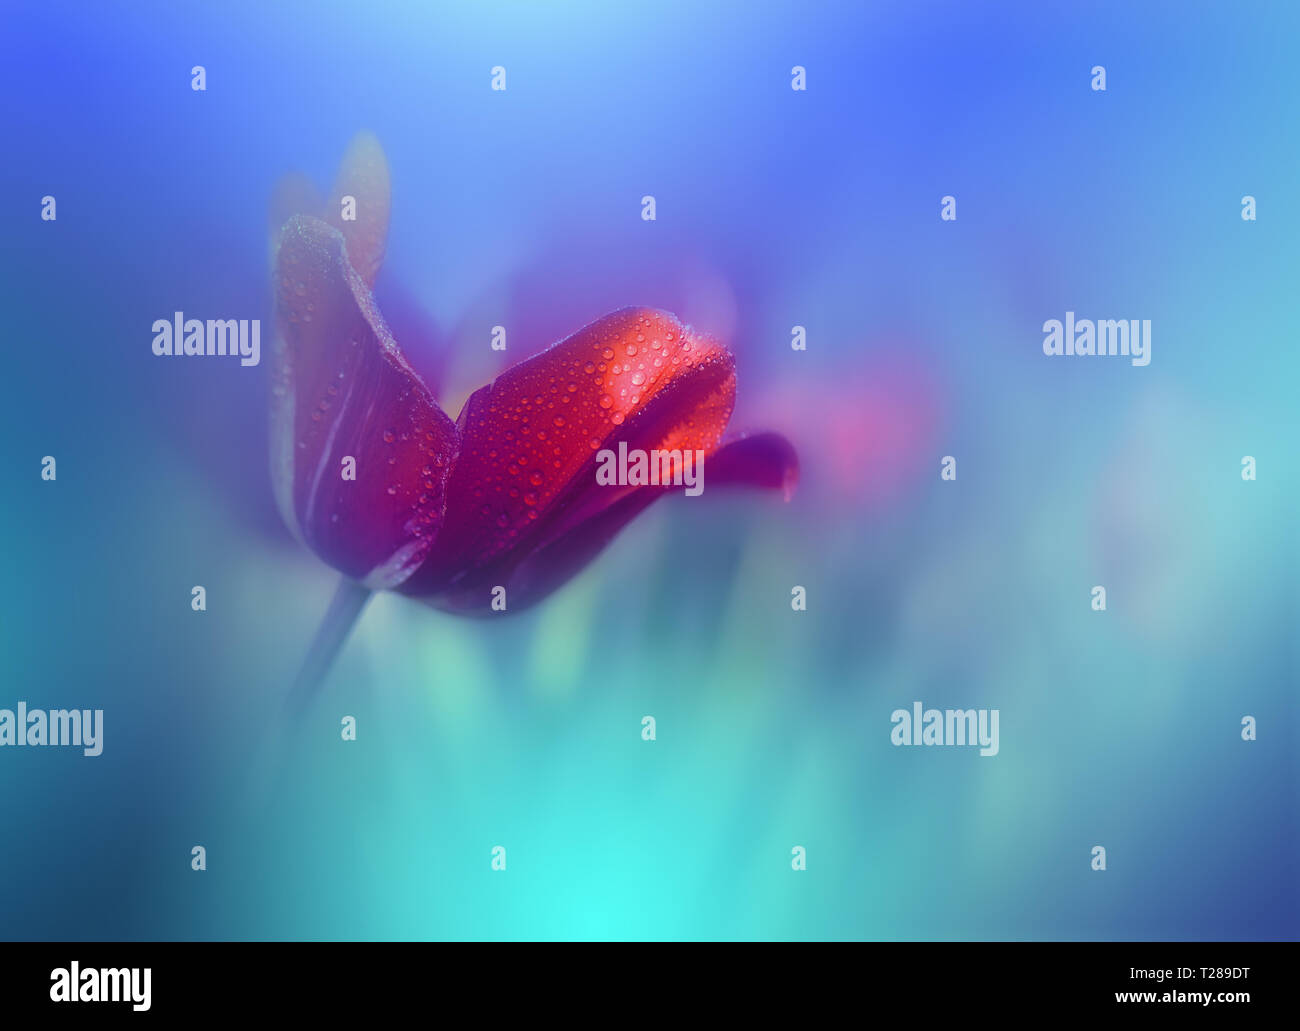 Hermosa naturaleza primavera fondo.Red Tulip.hermosa foto de magia Flores.Border Art Design.Cerrar la fotografía Macro.Creative Papel tapiz. Foto de stock